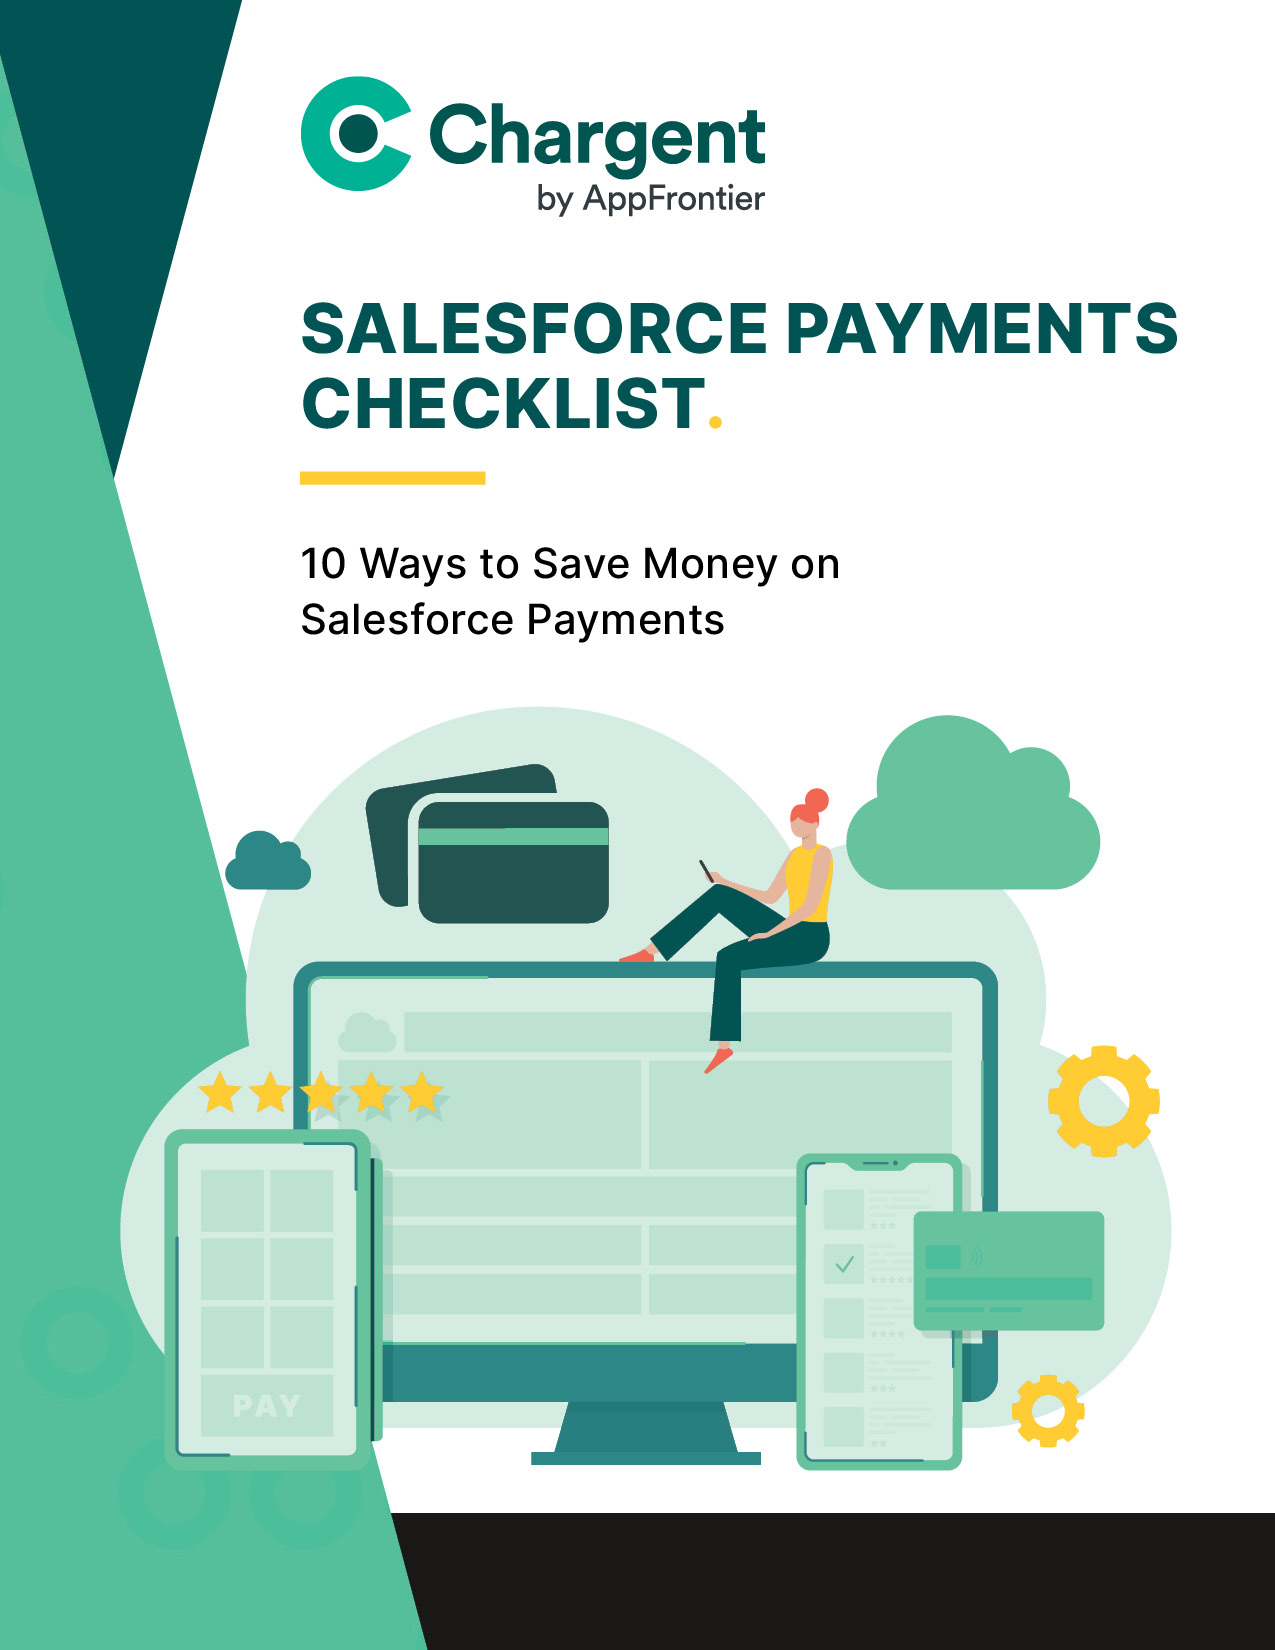 Checklist: 10 ways to save money on Salesforce payments